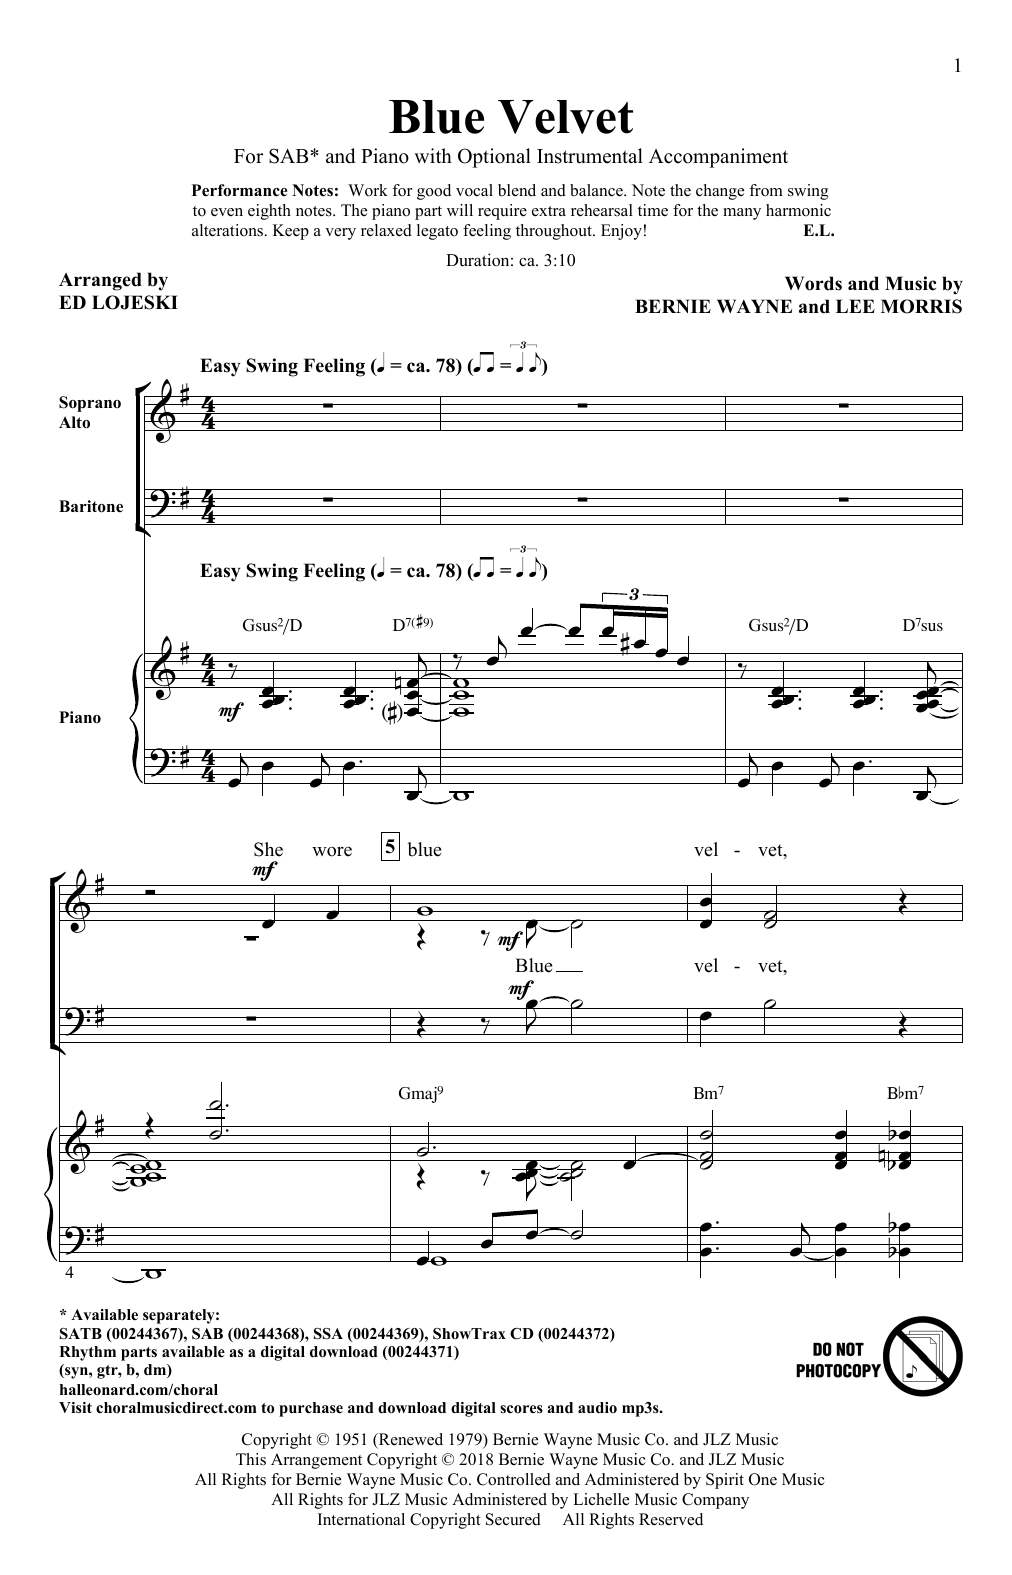 Ed Lojeski Blue Velvet Sheet Music Notes & Chords for SSA - Download or Print PDF